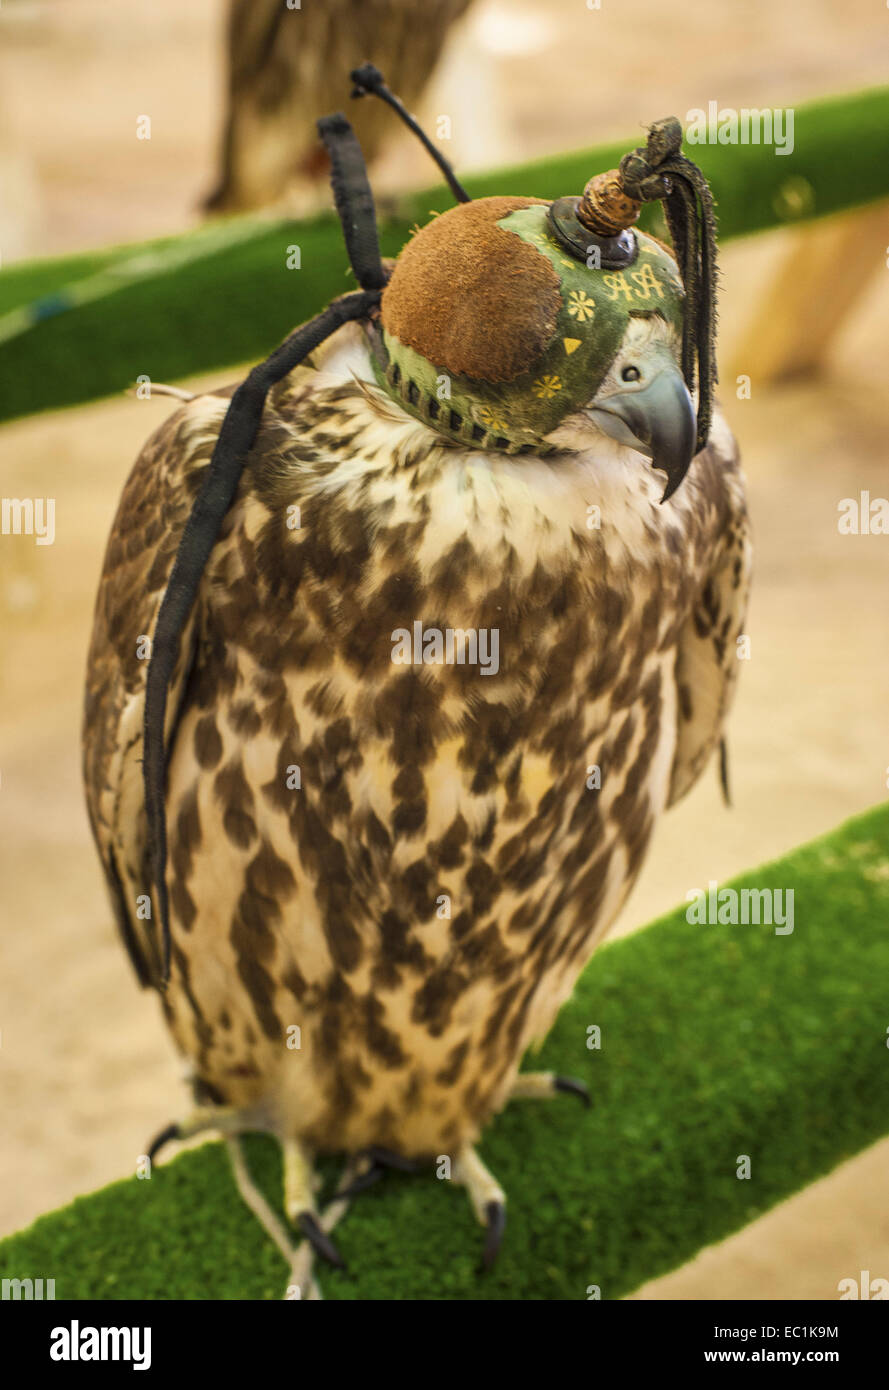 National bird of united arab emirates hi-res stock photography and images -  Alamy